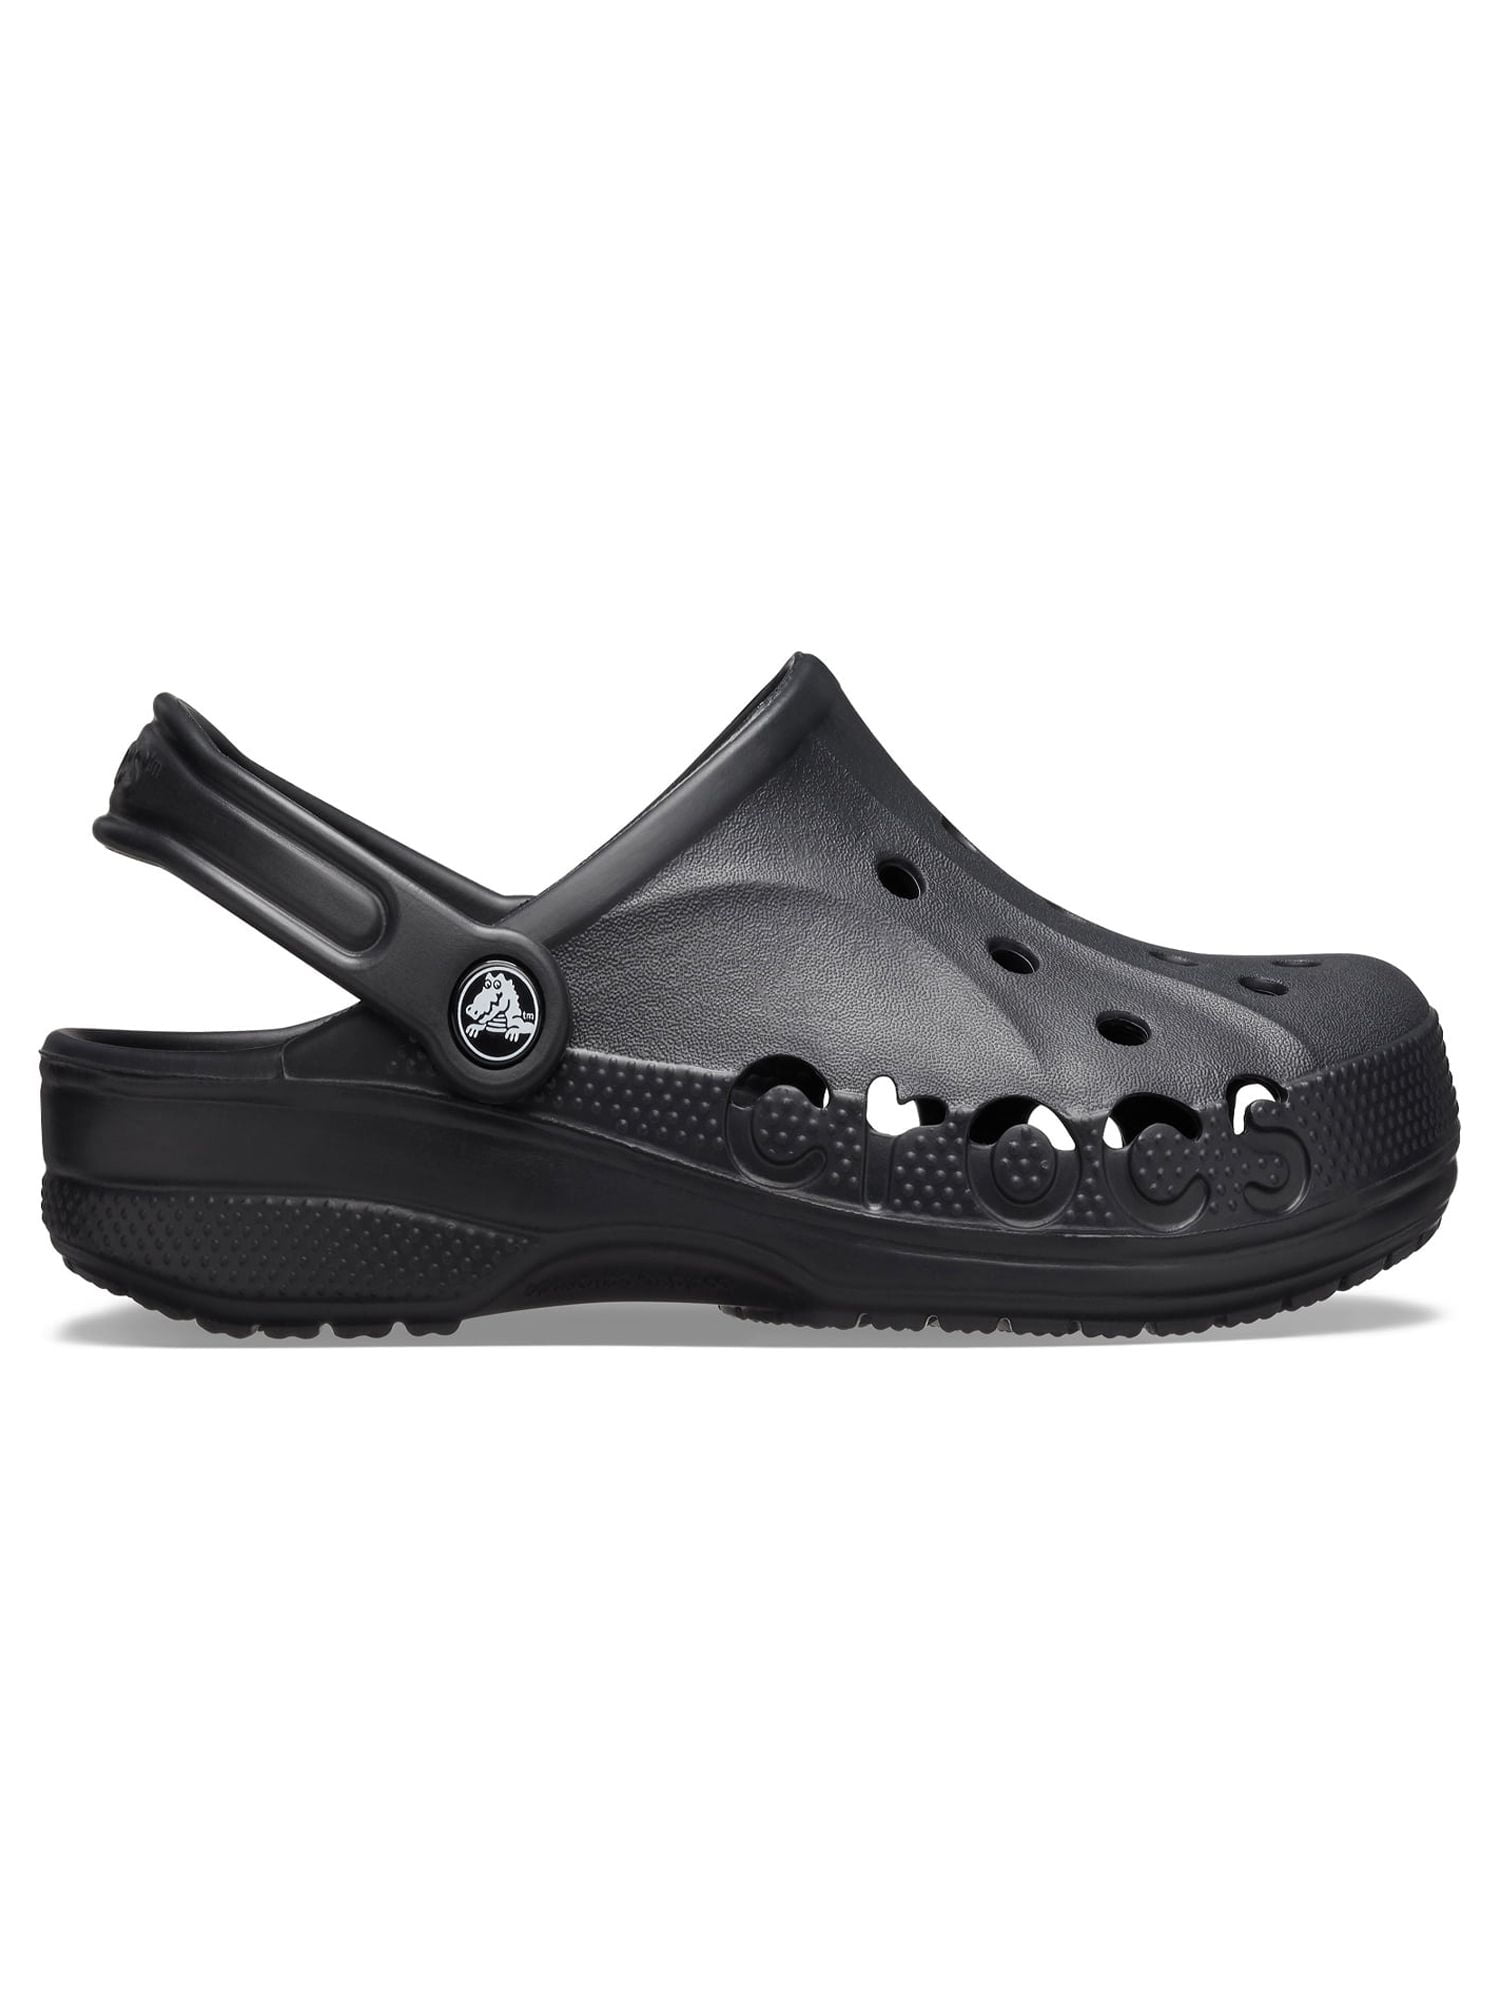 Crocs Men's and Women's Unisex Baya Clog Sandals - Walmart.com